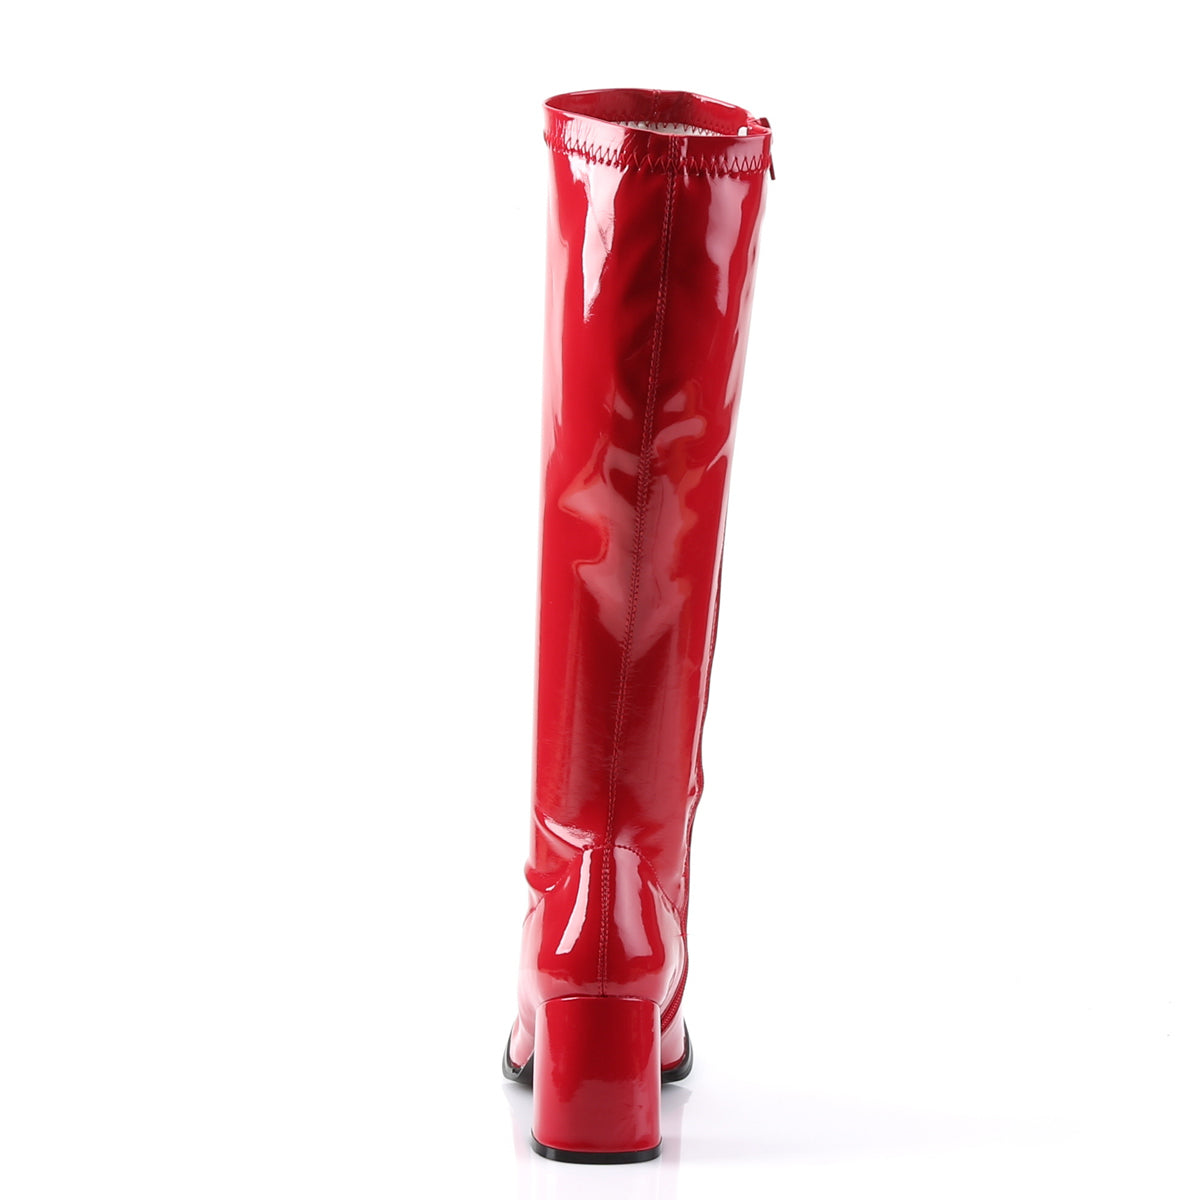 GOGO-300 Funtasma Fantasy Red Stretch Patent Women's Boots [Retro Knee High Boots]